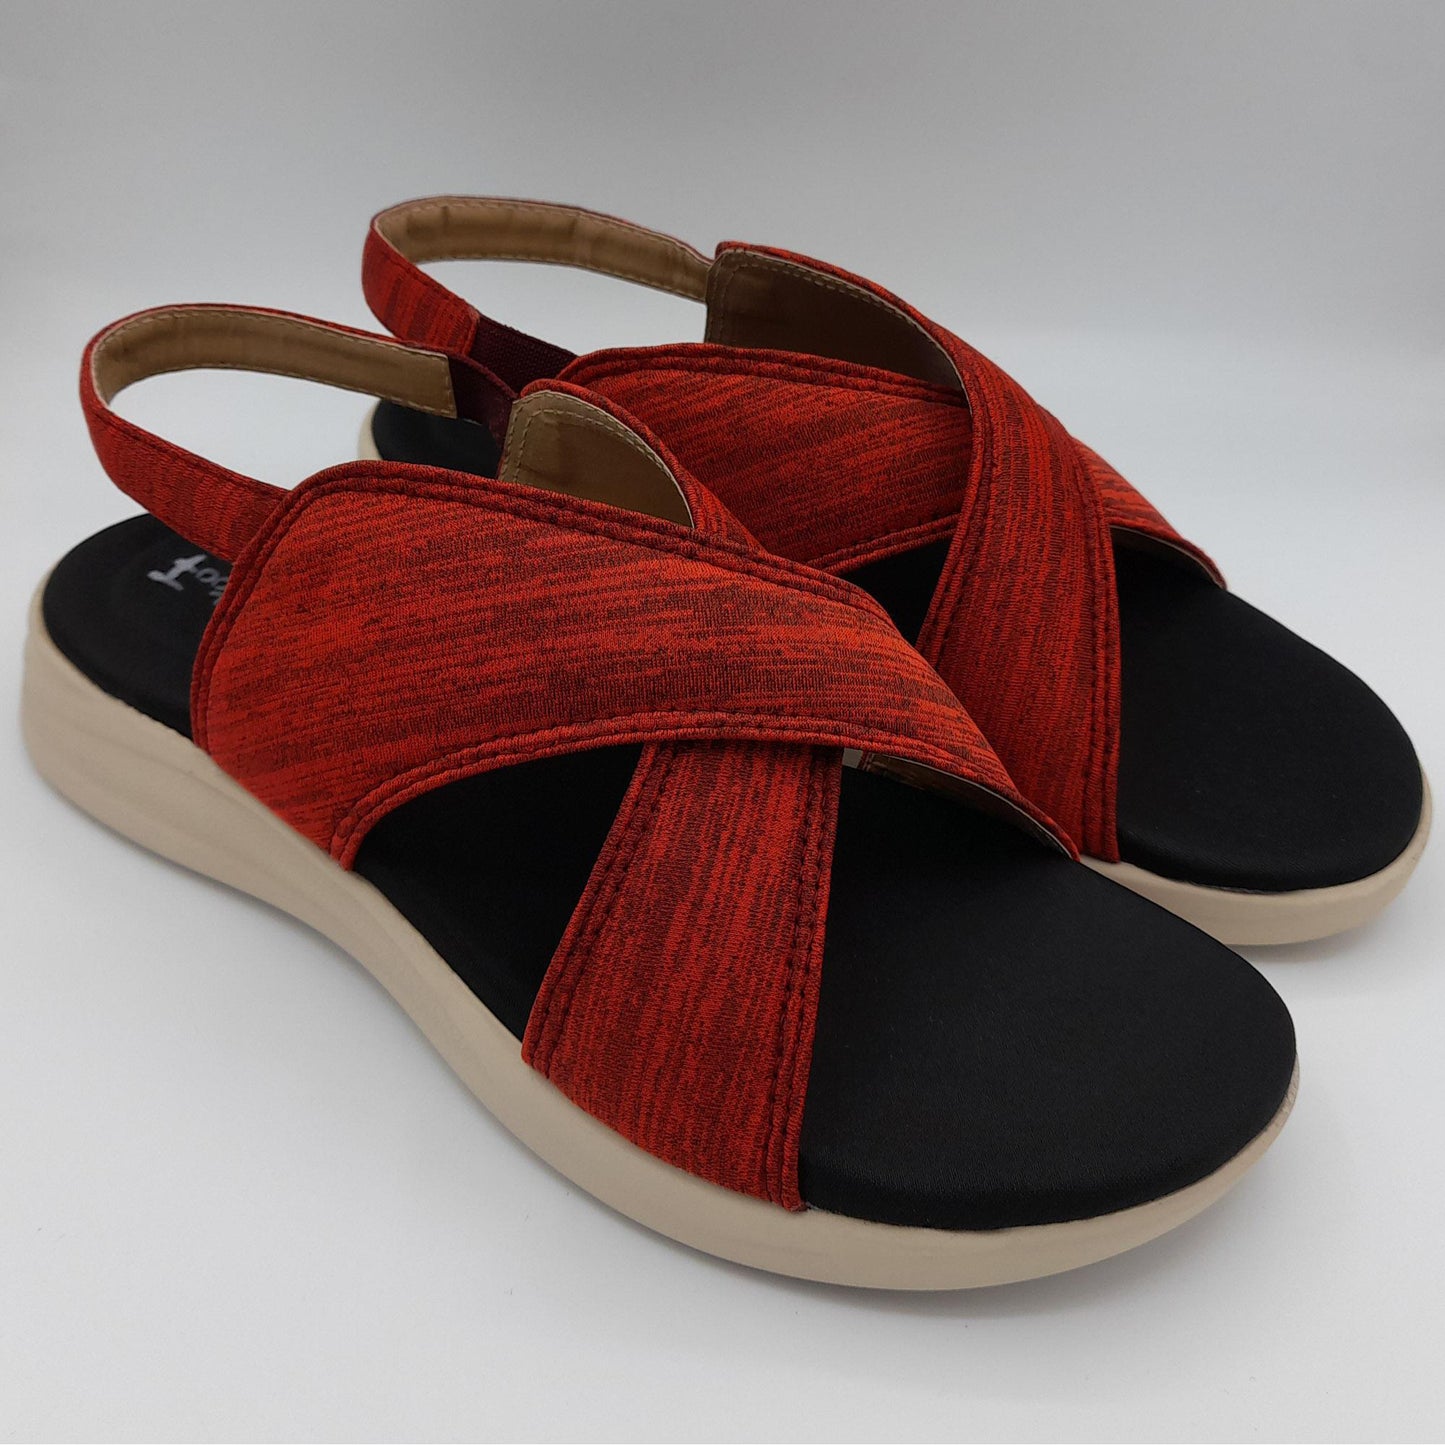 Comfort Sandals - VSM1200